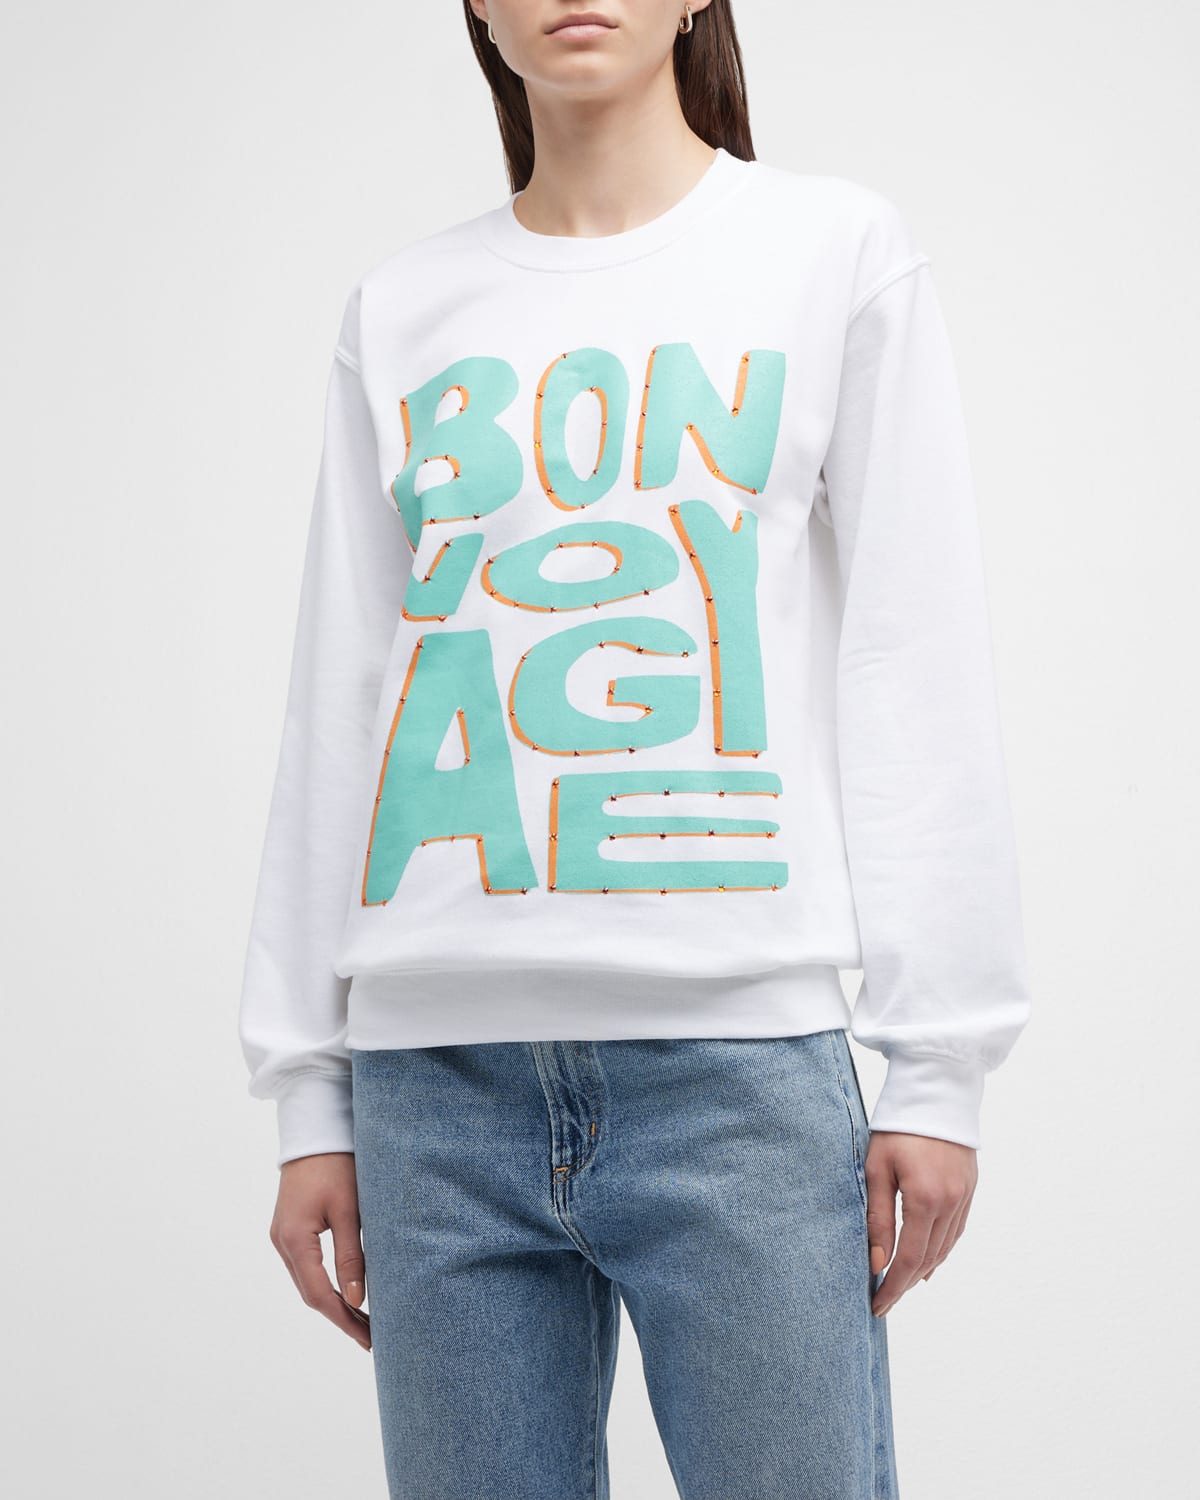 Bon Voyage Rhinestone Graphic Sweatshirt